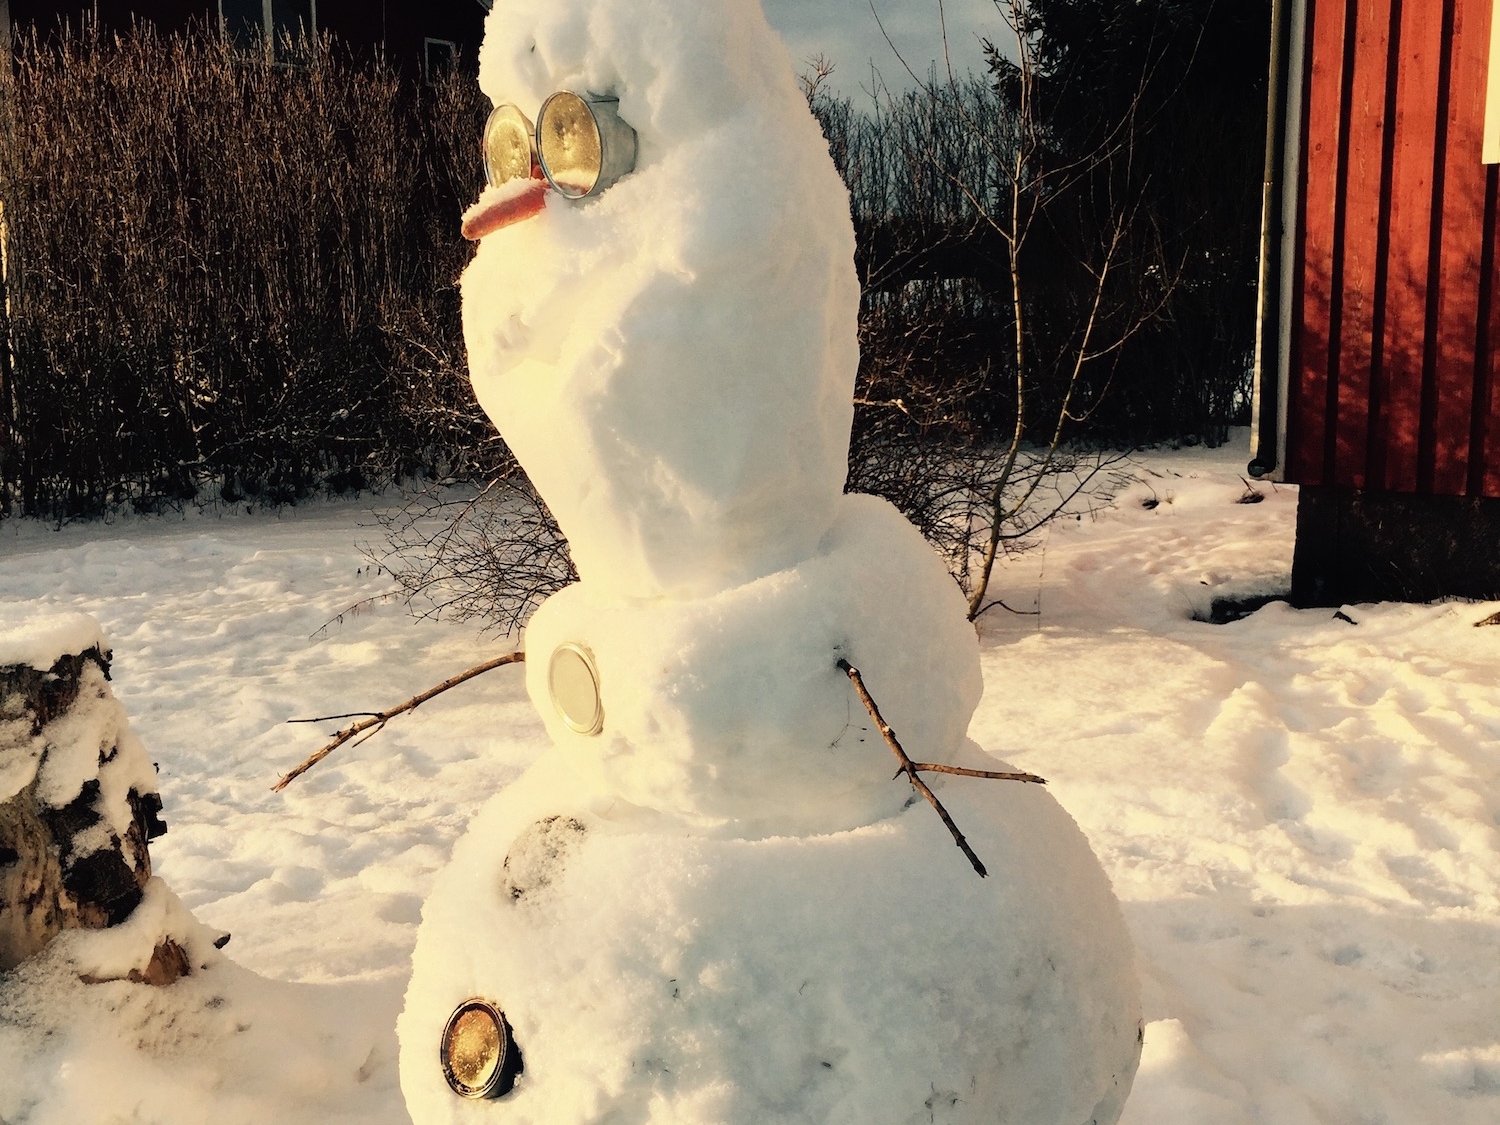 My name is Olaf and I love warm hugs!